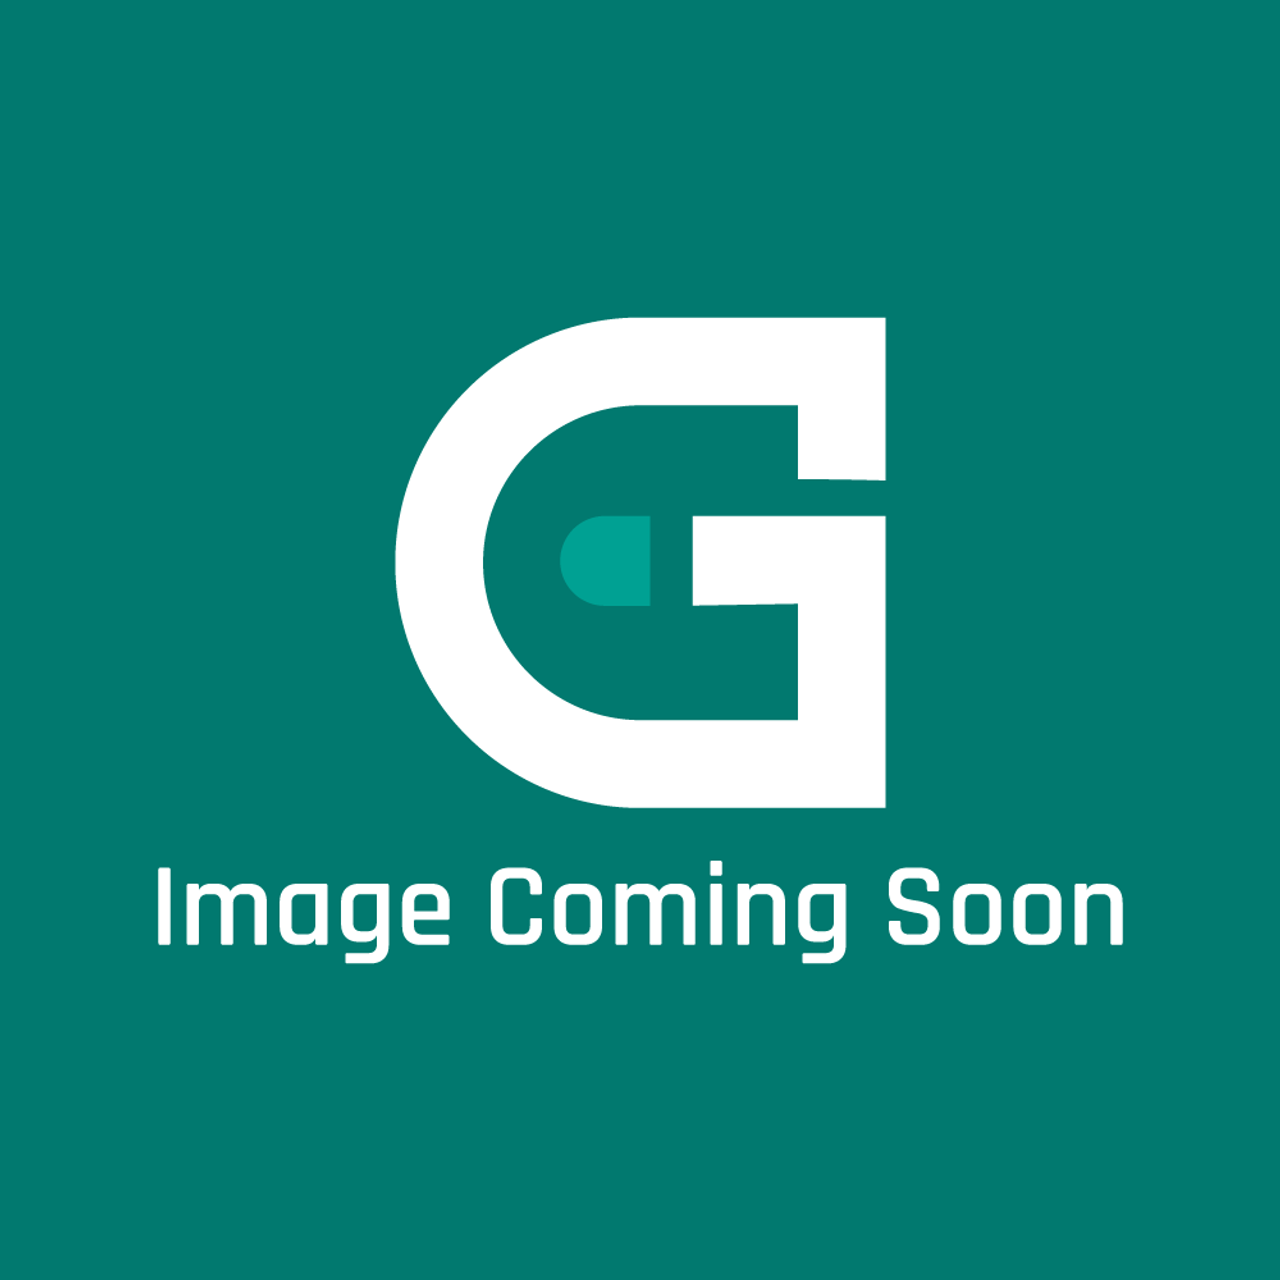 Dacor  - ASSY GASKET BRW9000R,DARK GRAY,H1679,W520.5 - Image Coming Soon!